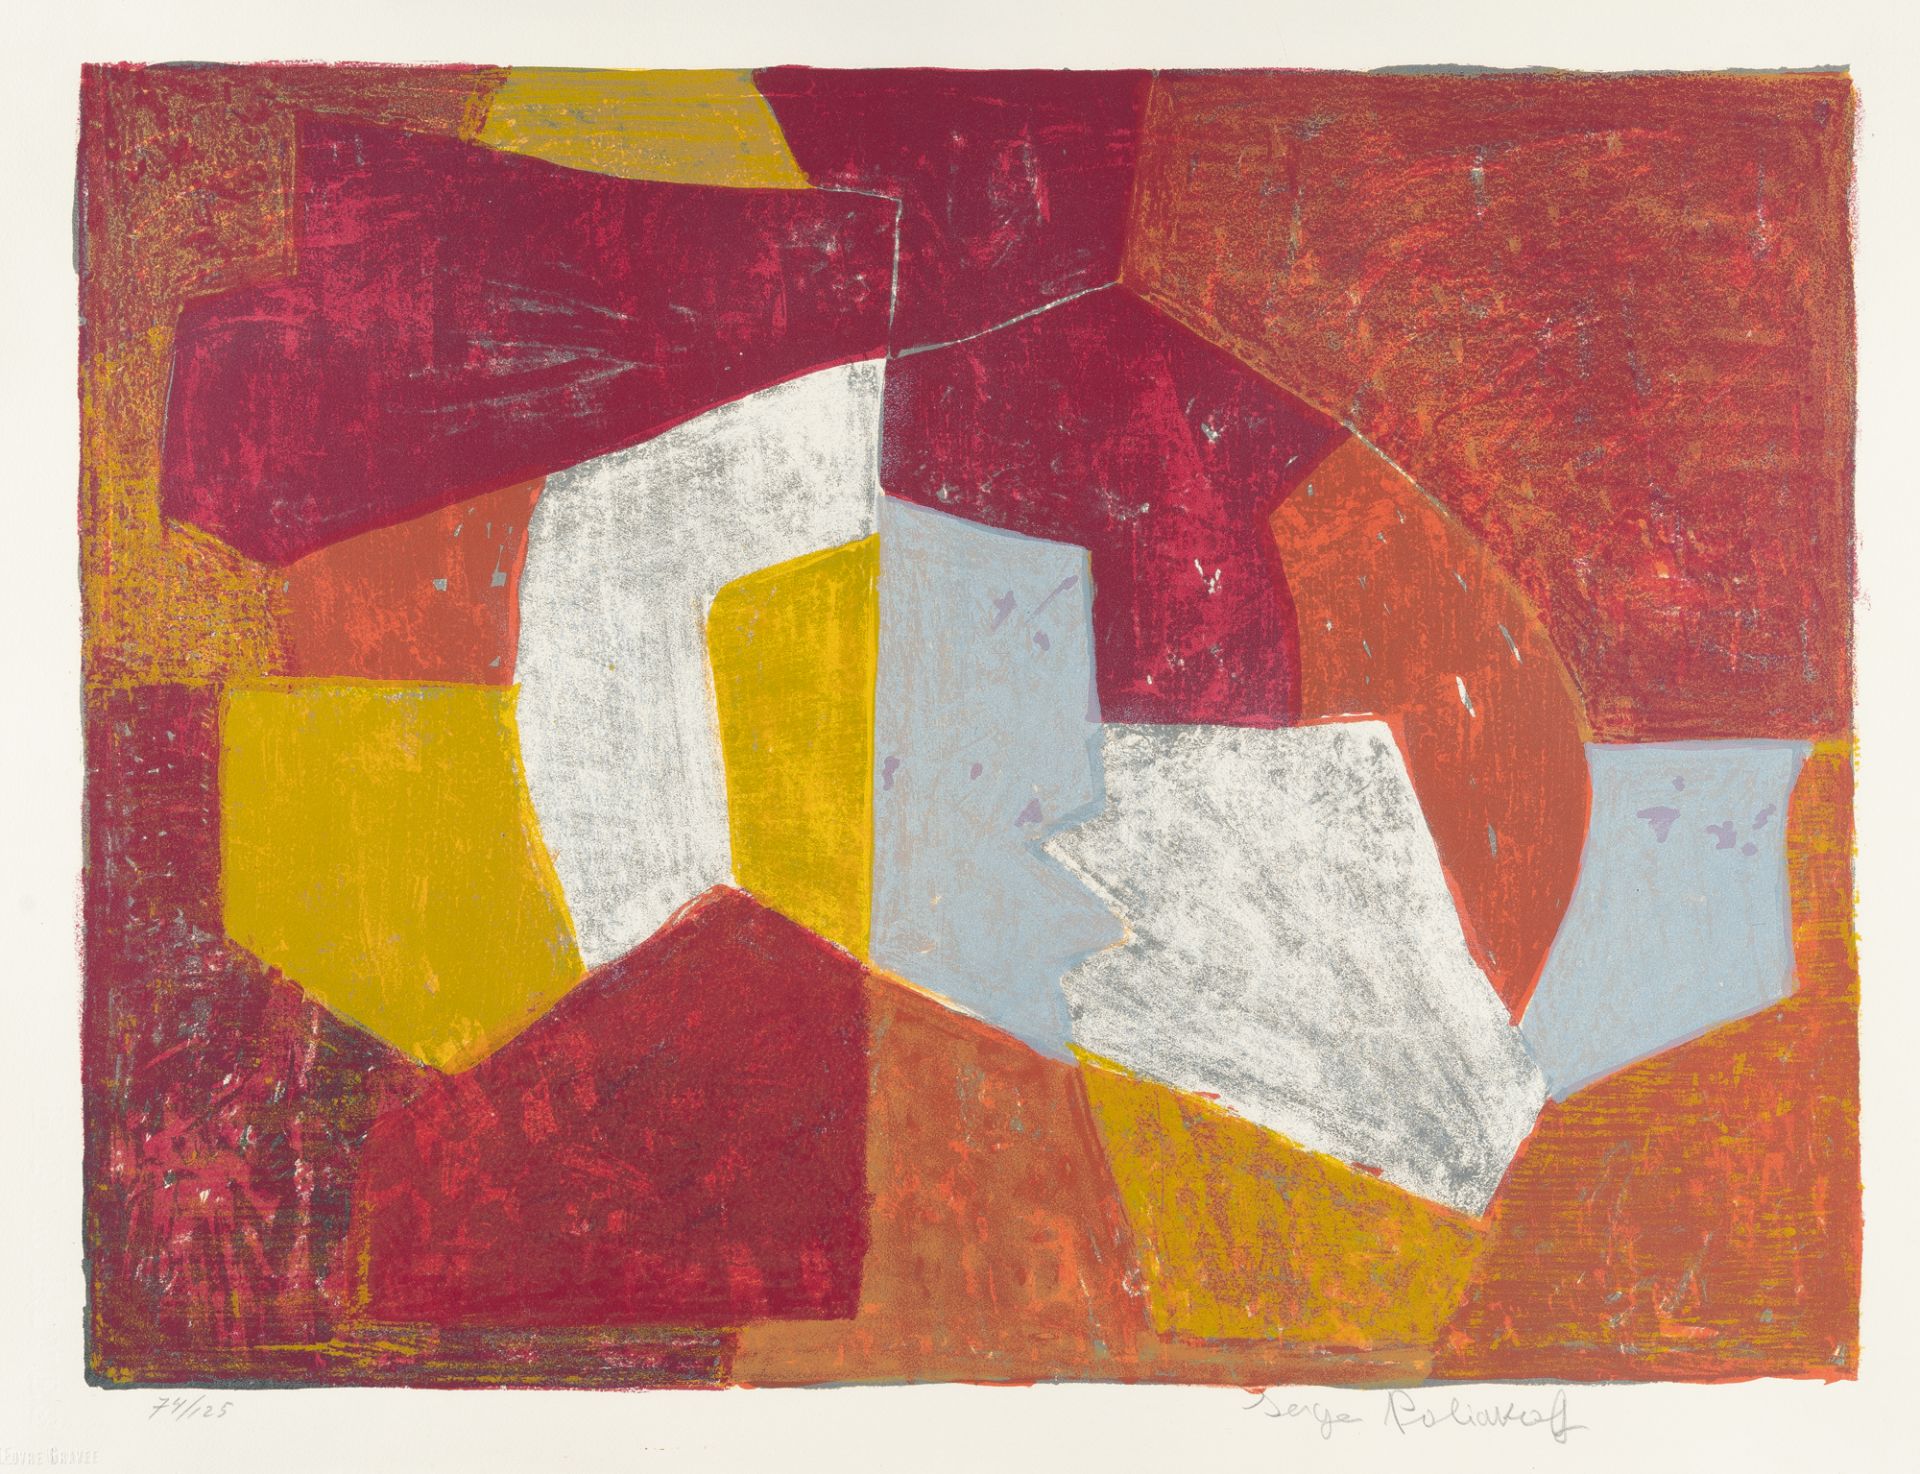 Serge Poliakoff, Composition carmin, brune, jaune et grise.Lithograph in colours on wove von BFK